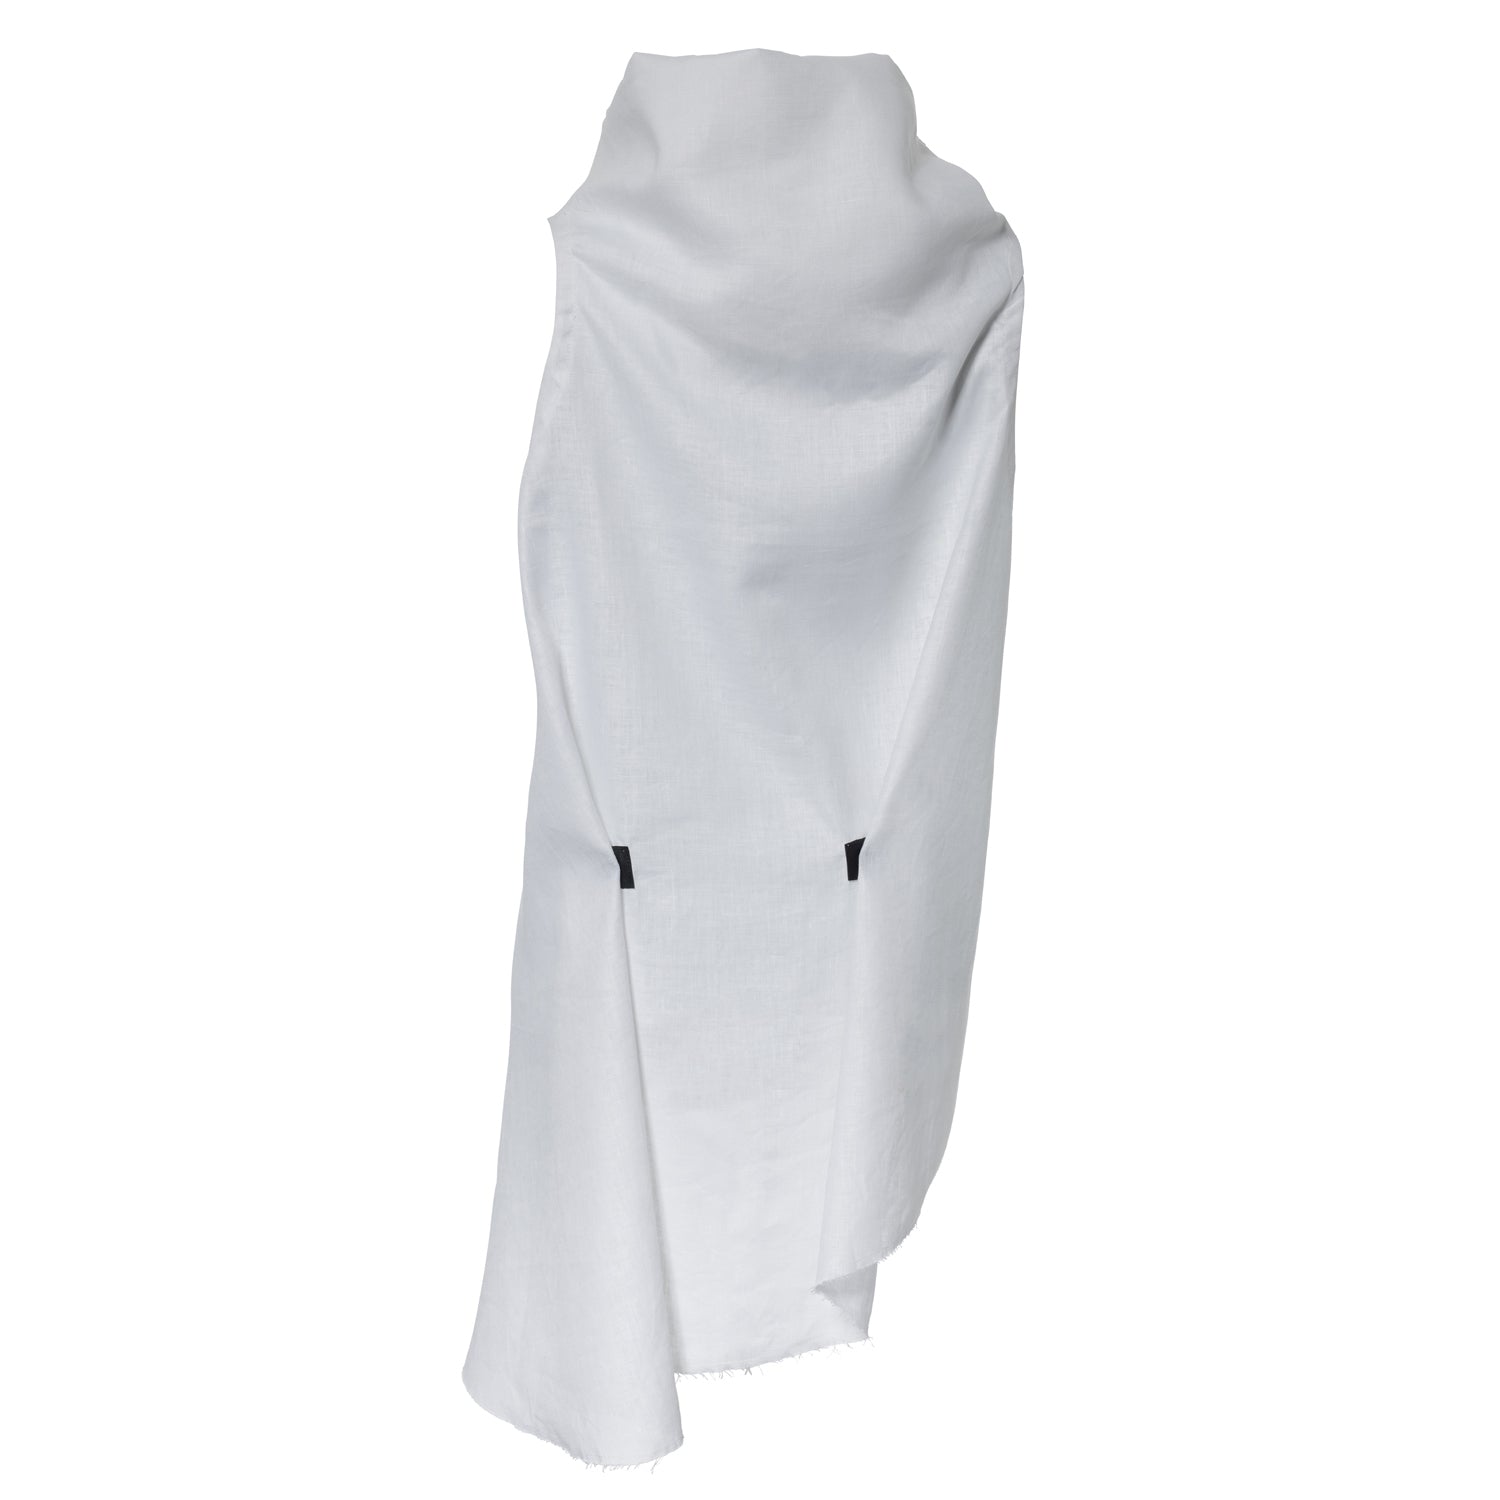 A white asymmetrical linen summer vest by Malaika New York